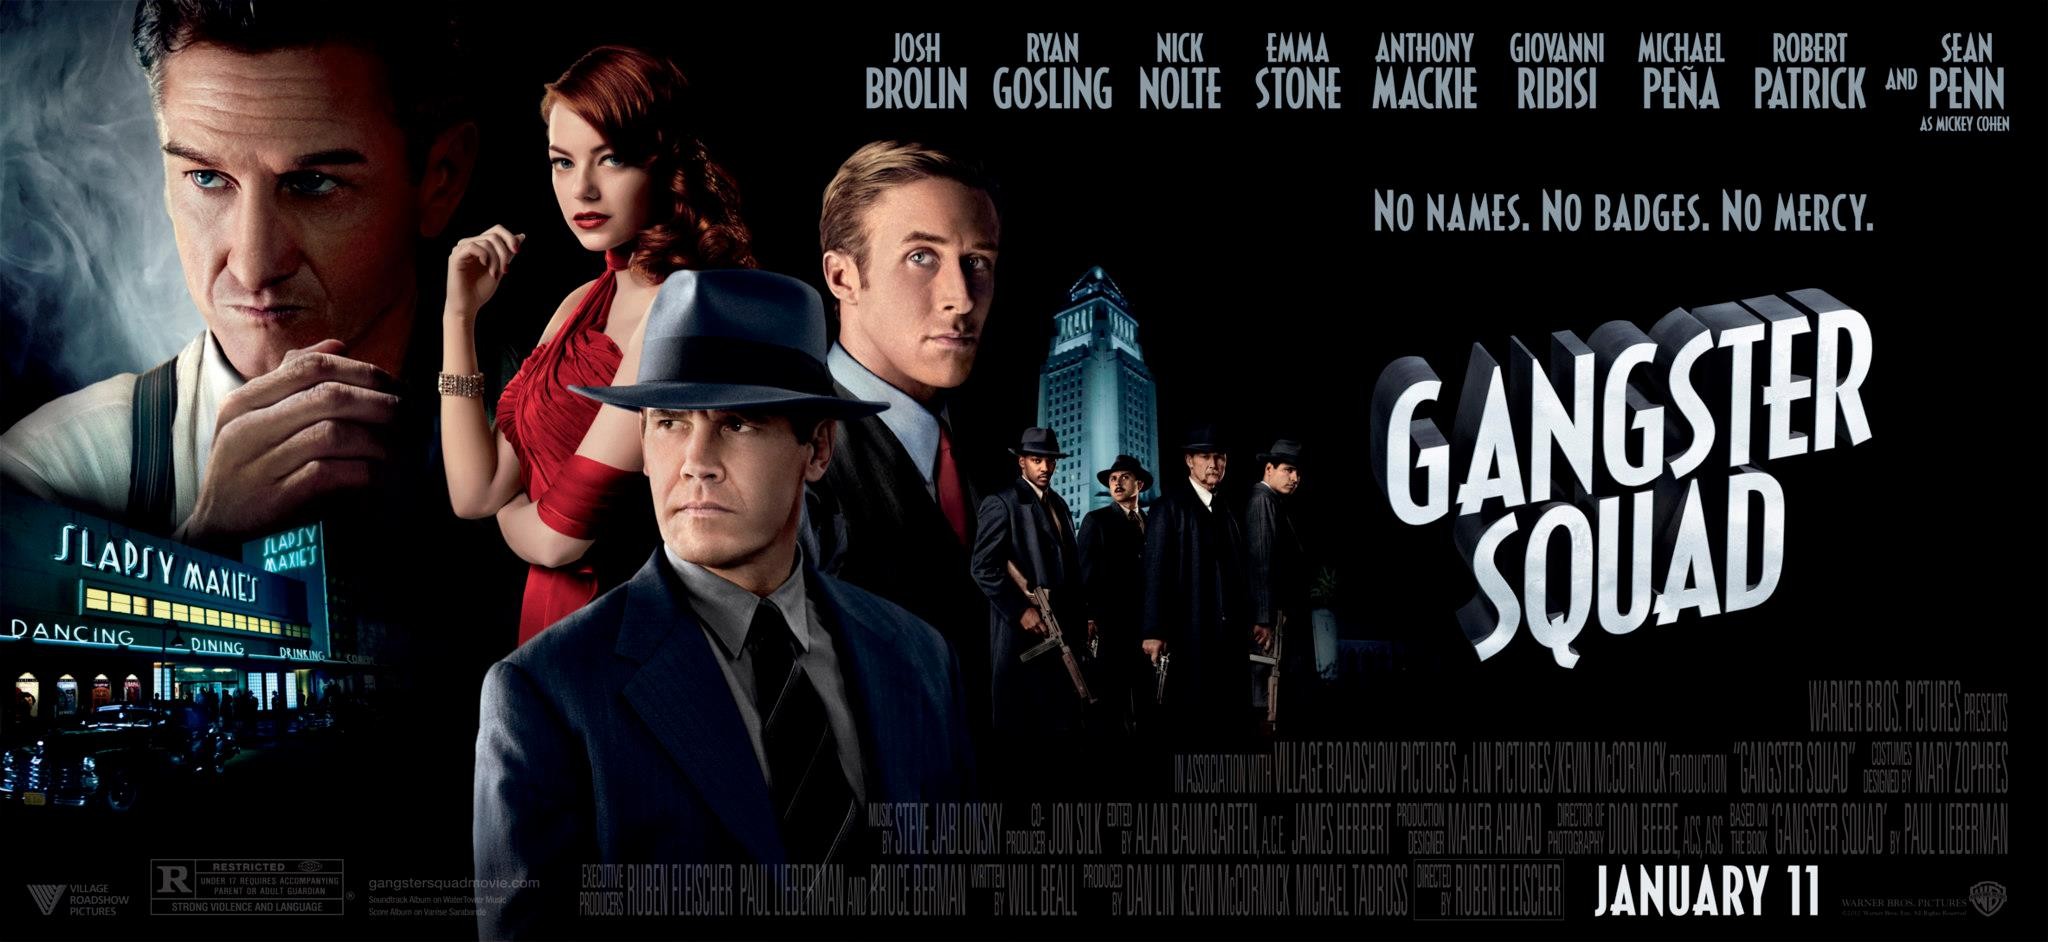 Mega Sized Movie Poster Image for Gangster Squad